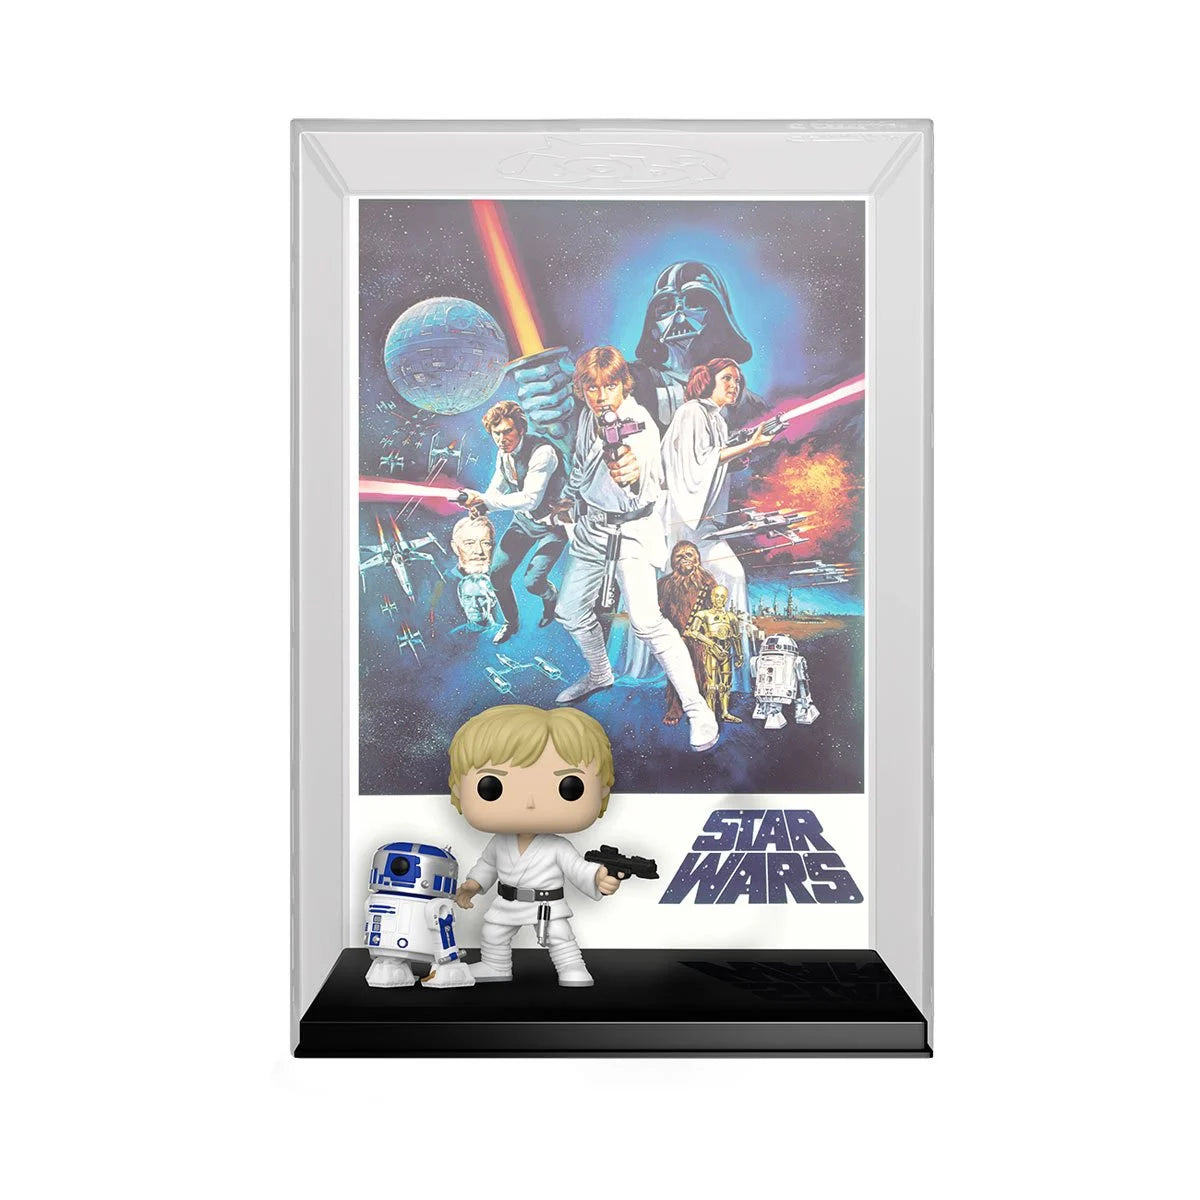 Luke Skywalker A New Hope Episode IV - Star Wars Pop! Movie Poster Figure with Case